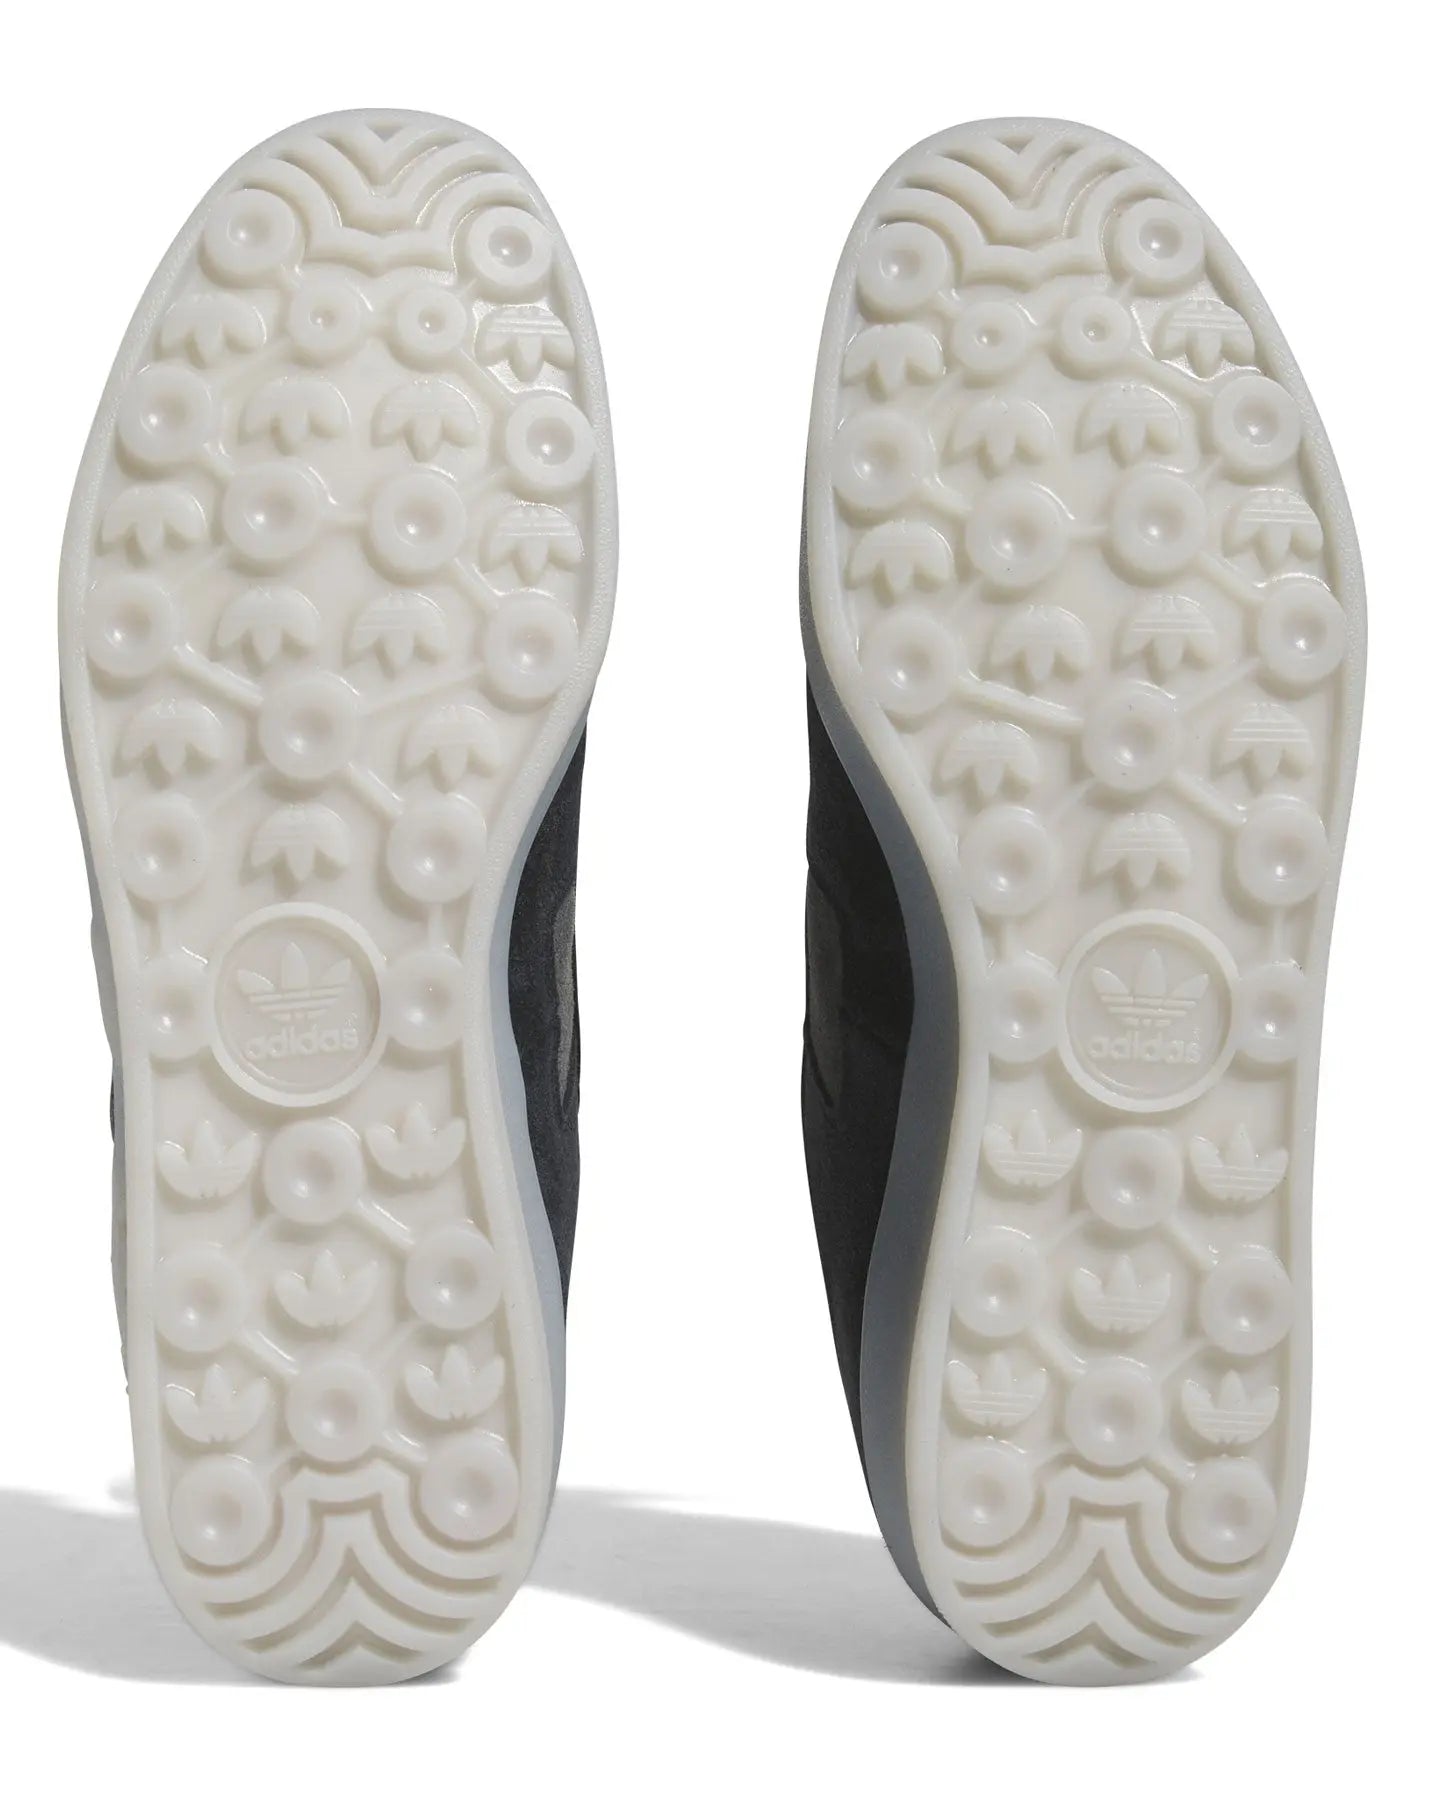 Adidas Aloha Super - Black / White / Carbon Footwear